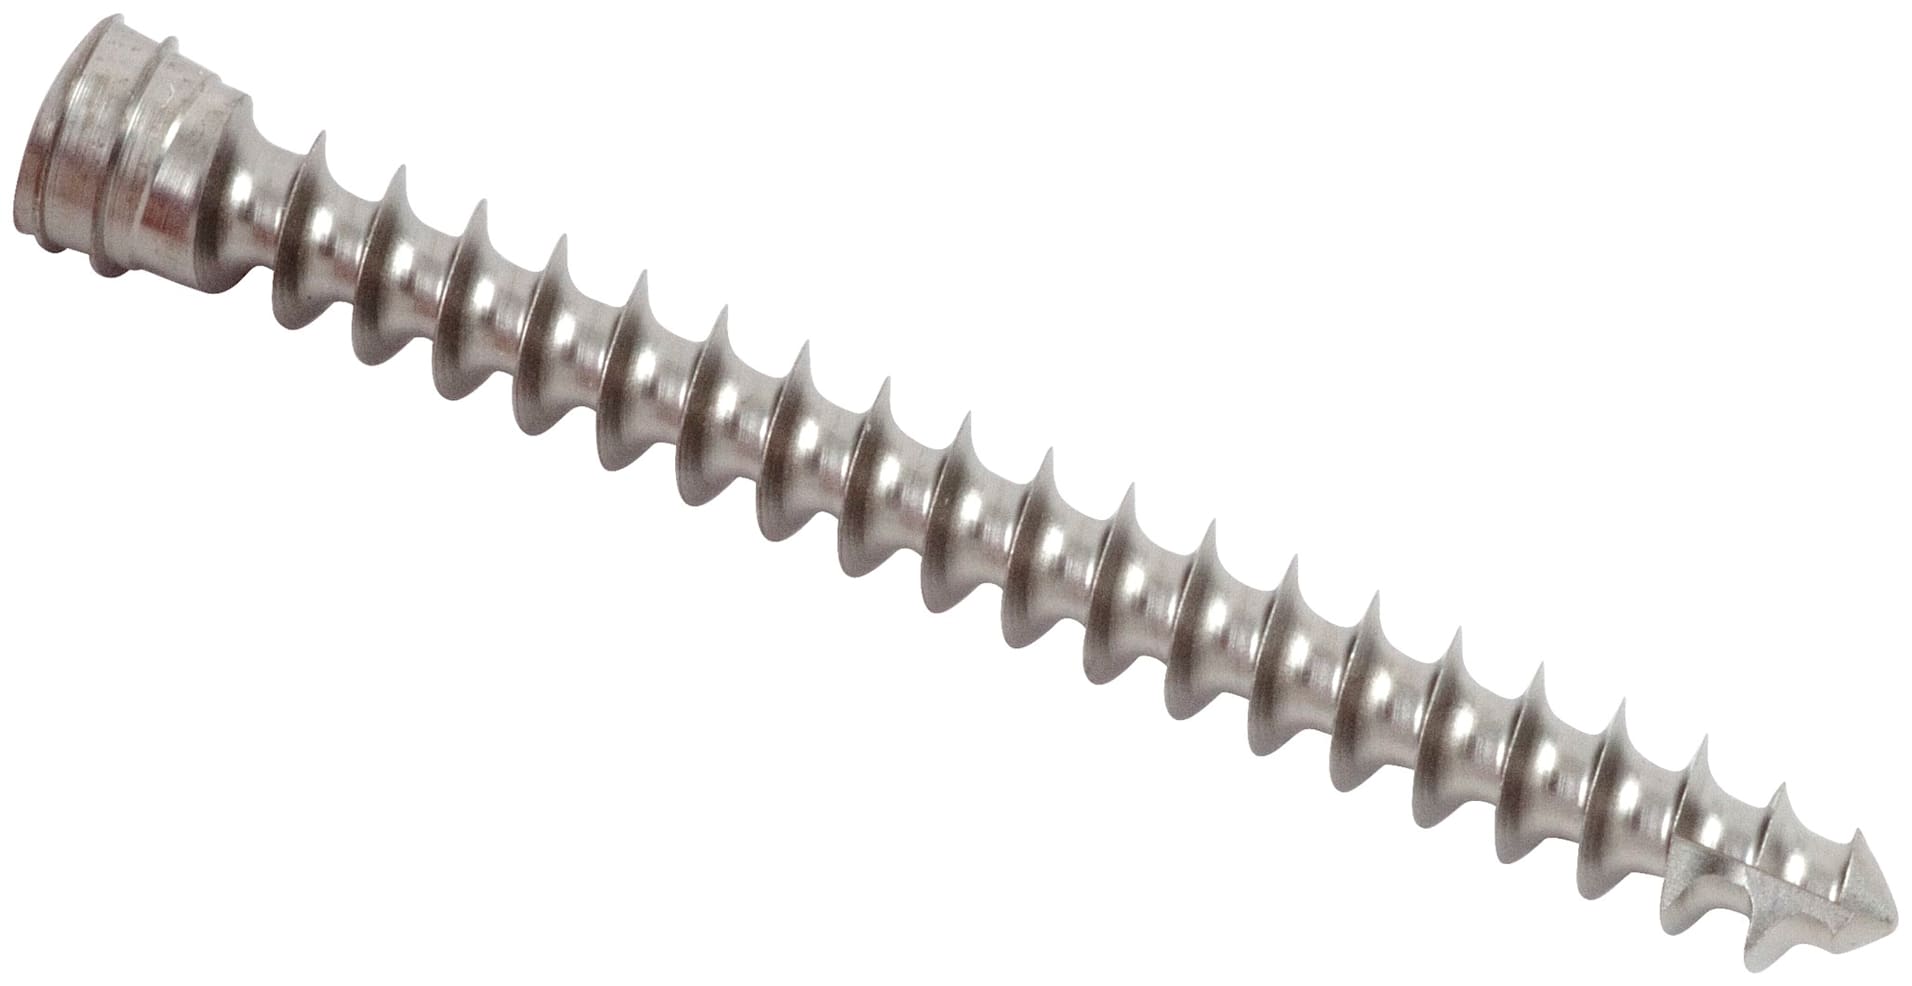 Cancellous Locking Screw, 4 mm x 40 mm